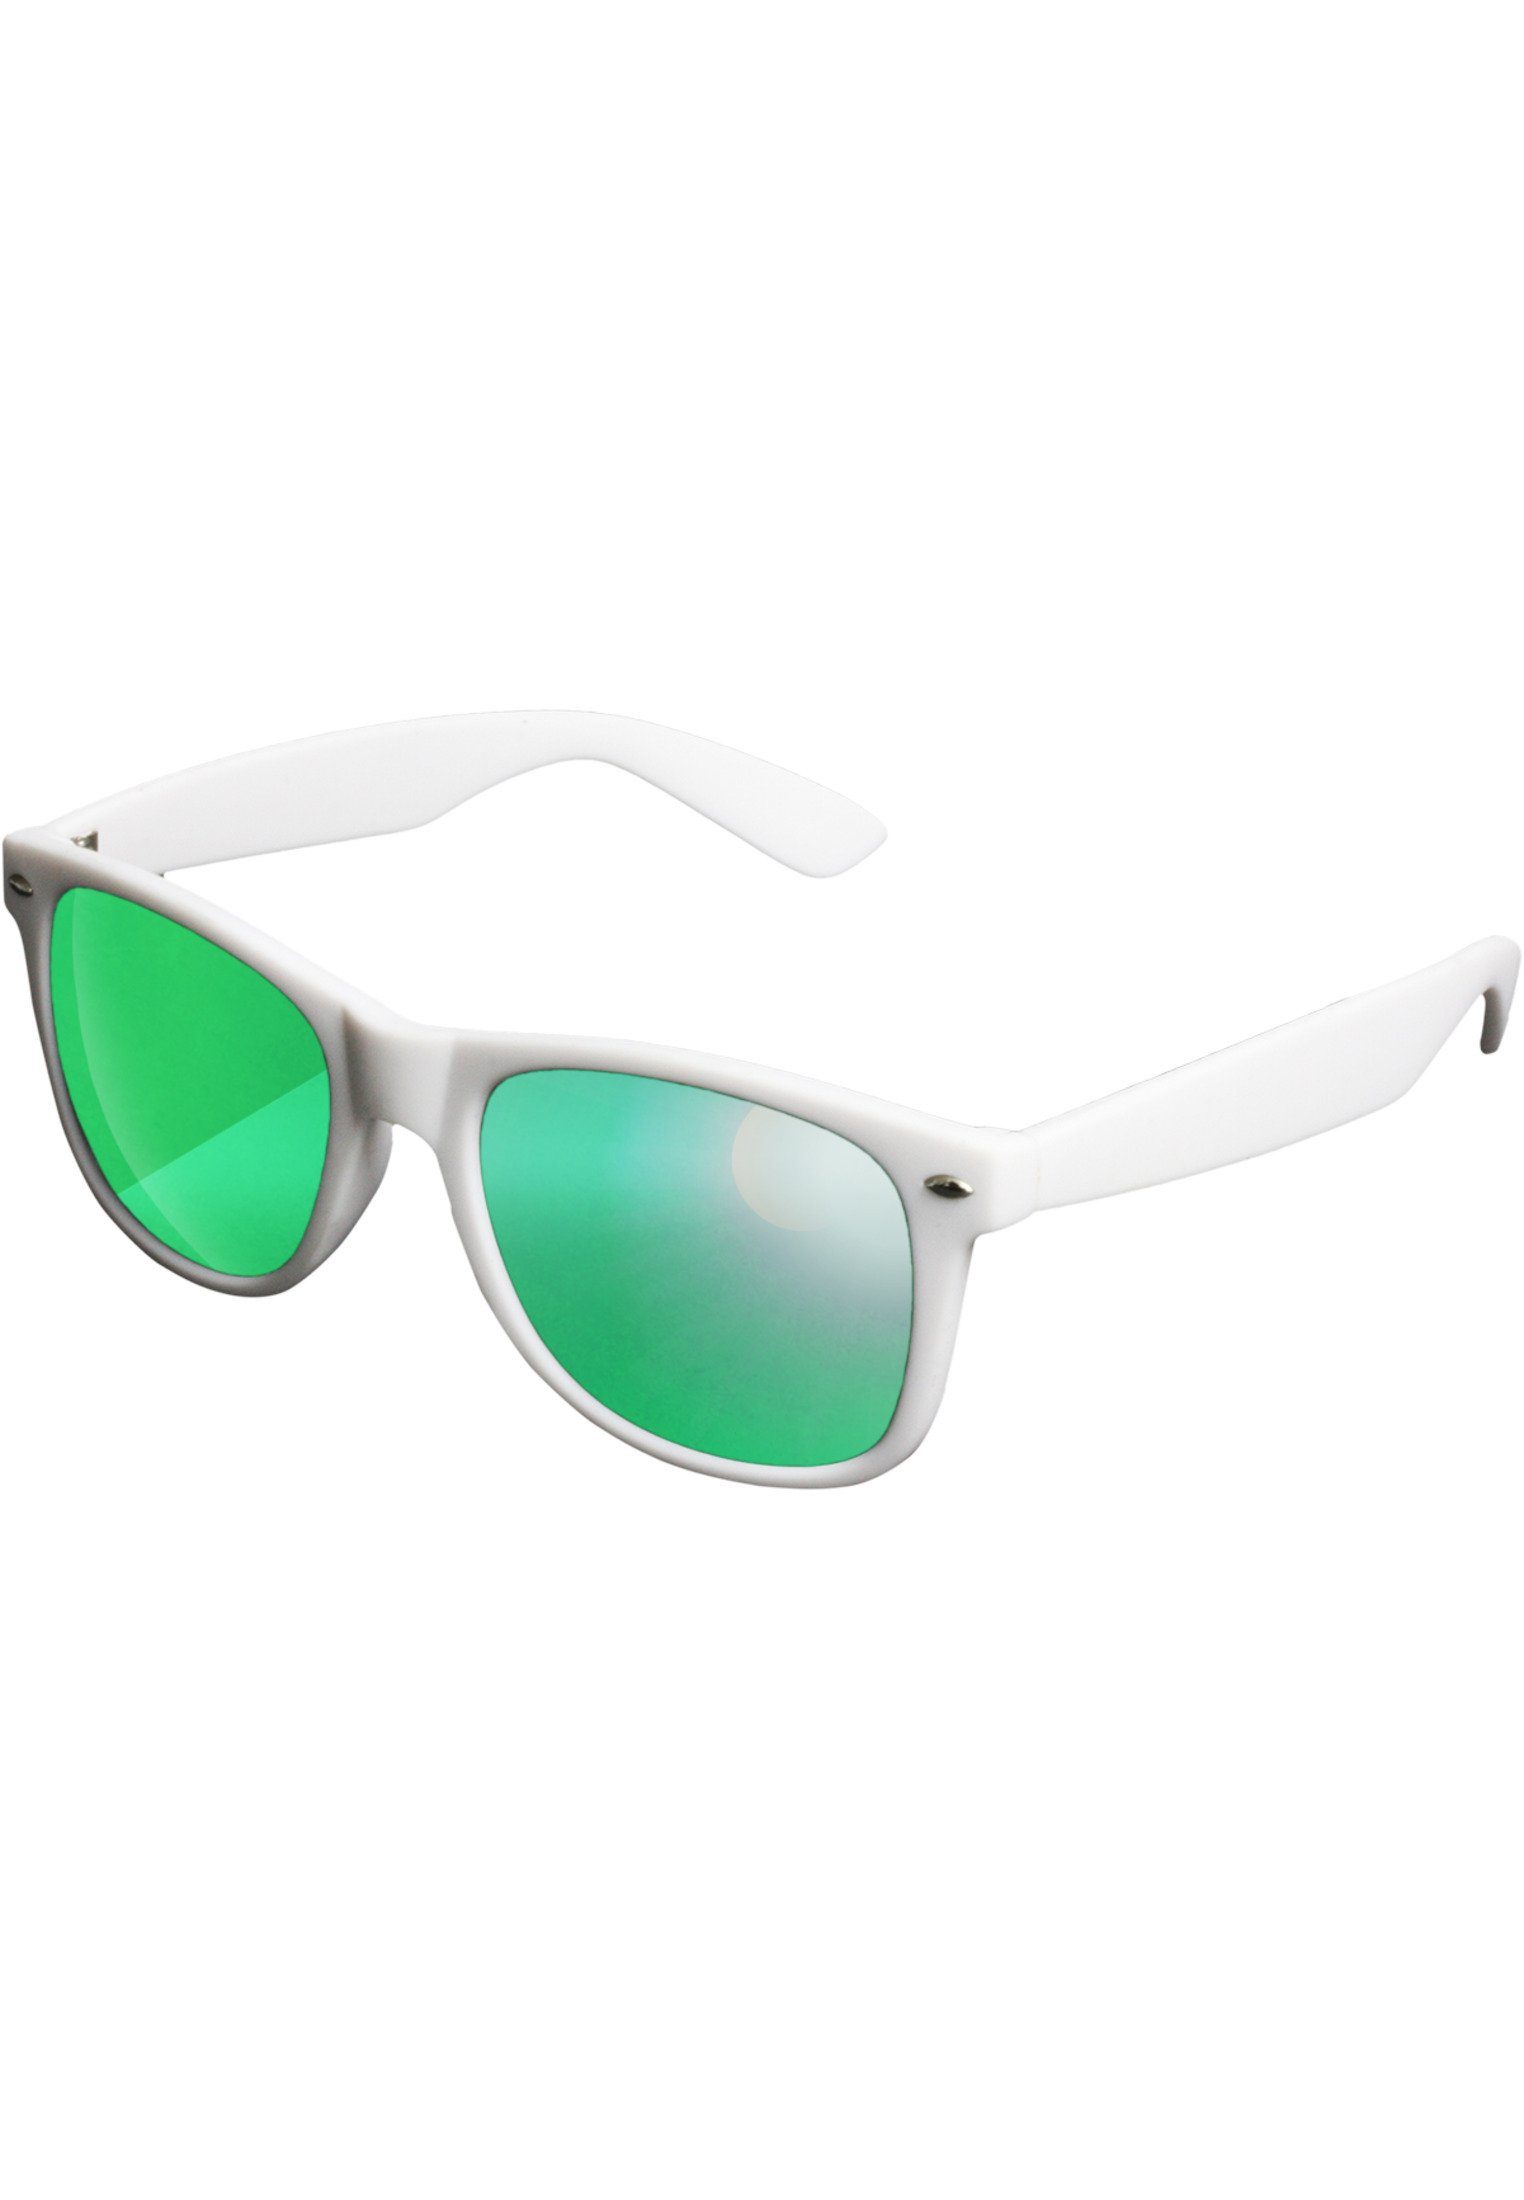 Sunglasses Mirror Accessoires Sonnenbrille Likoma wht/grn MSTRDS